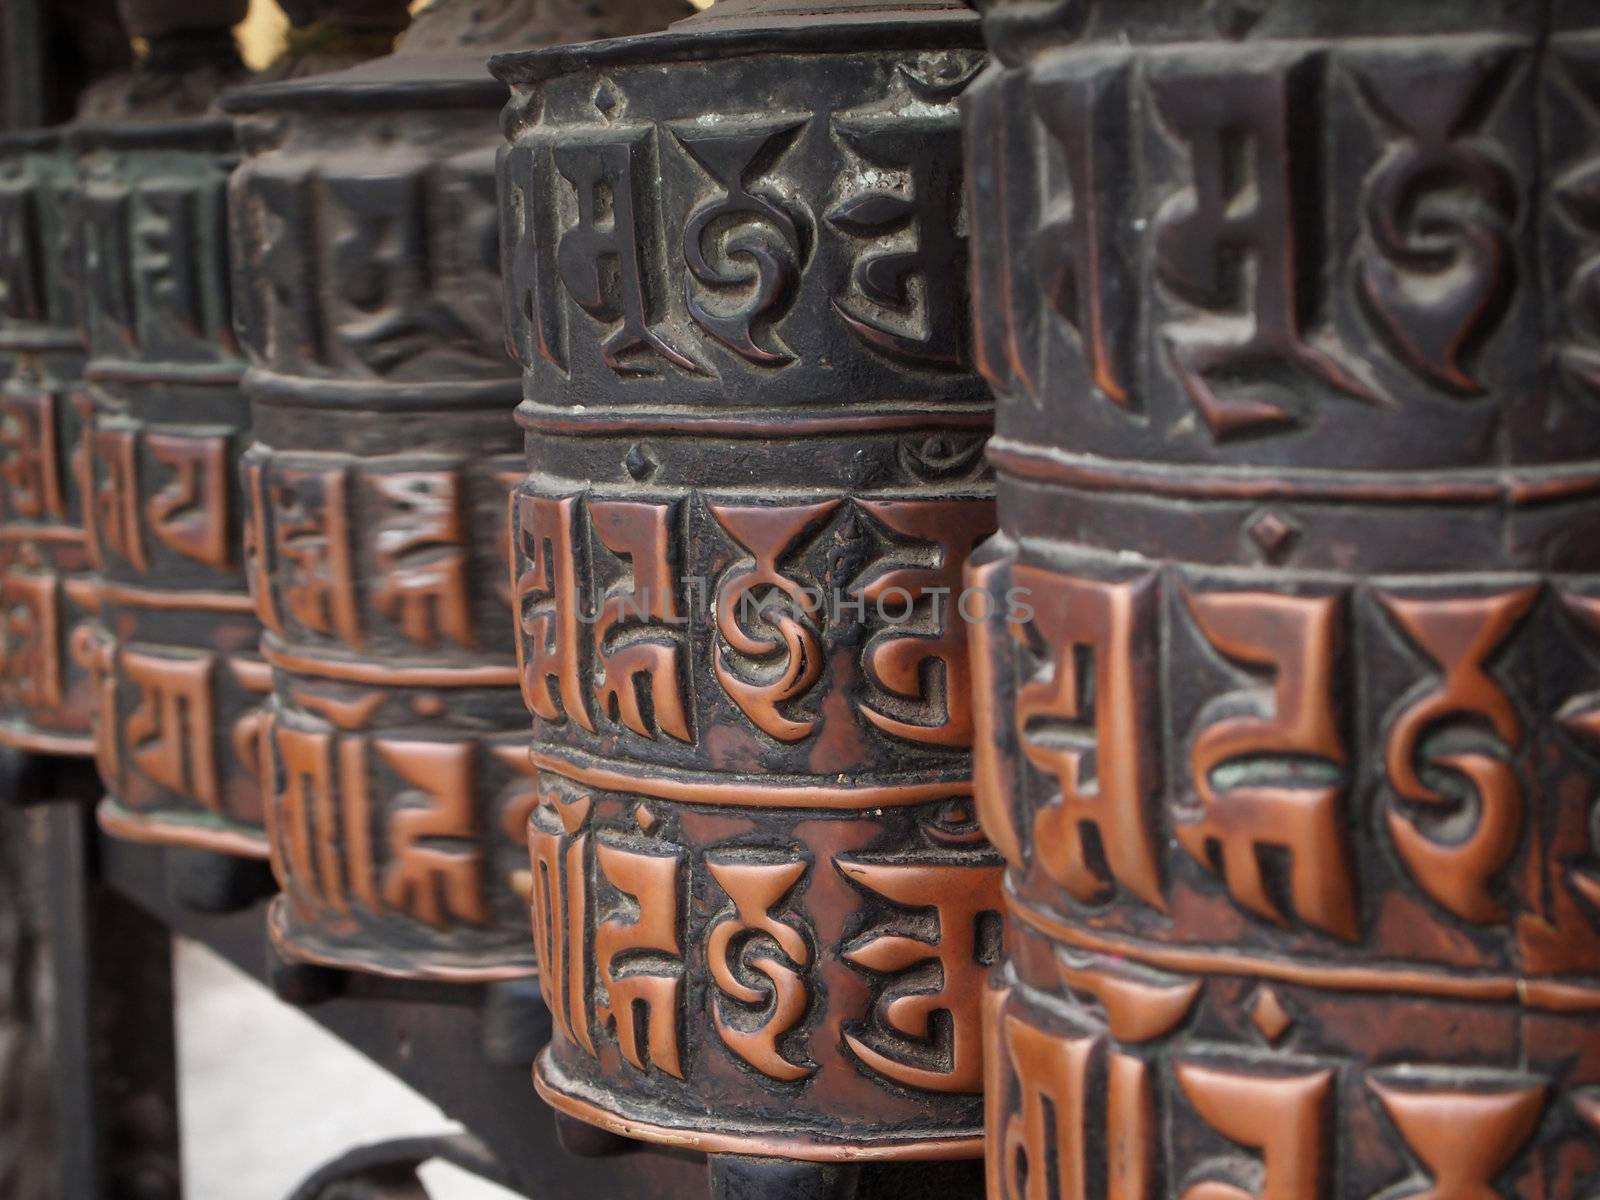 Decorated buddhist prayer wheels in a stupa.